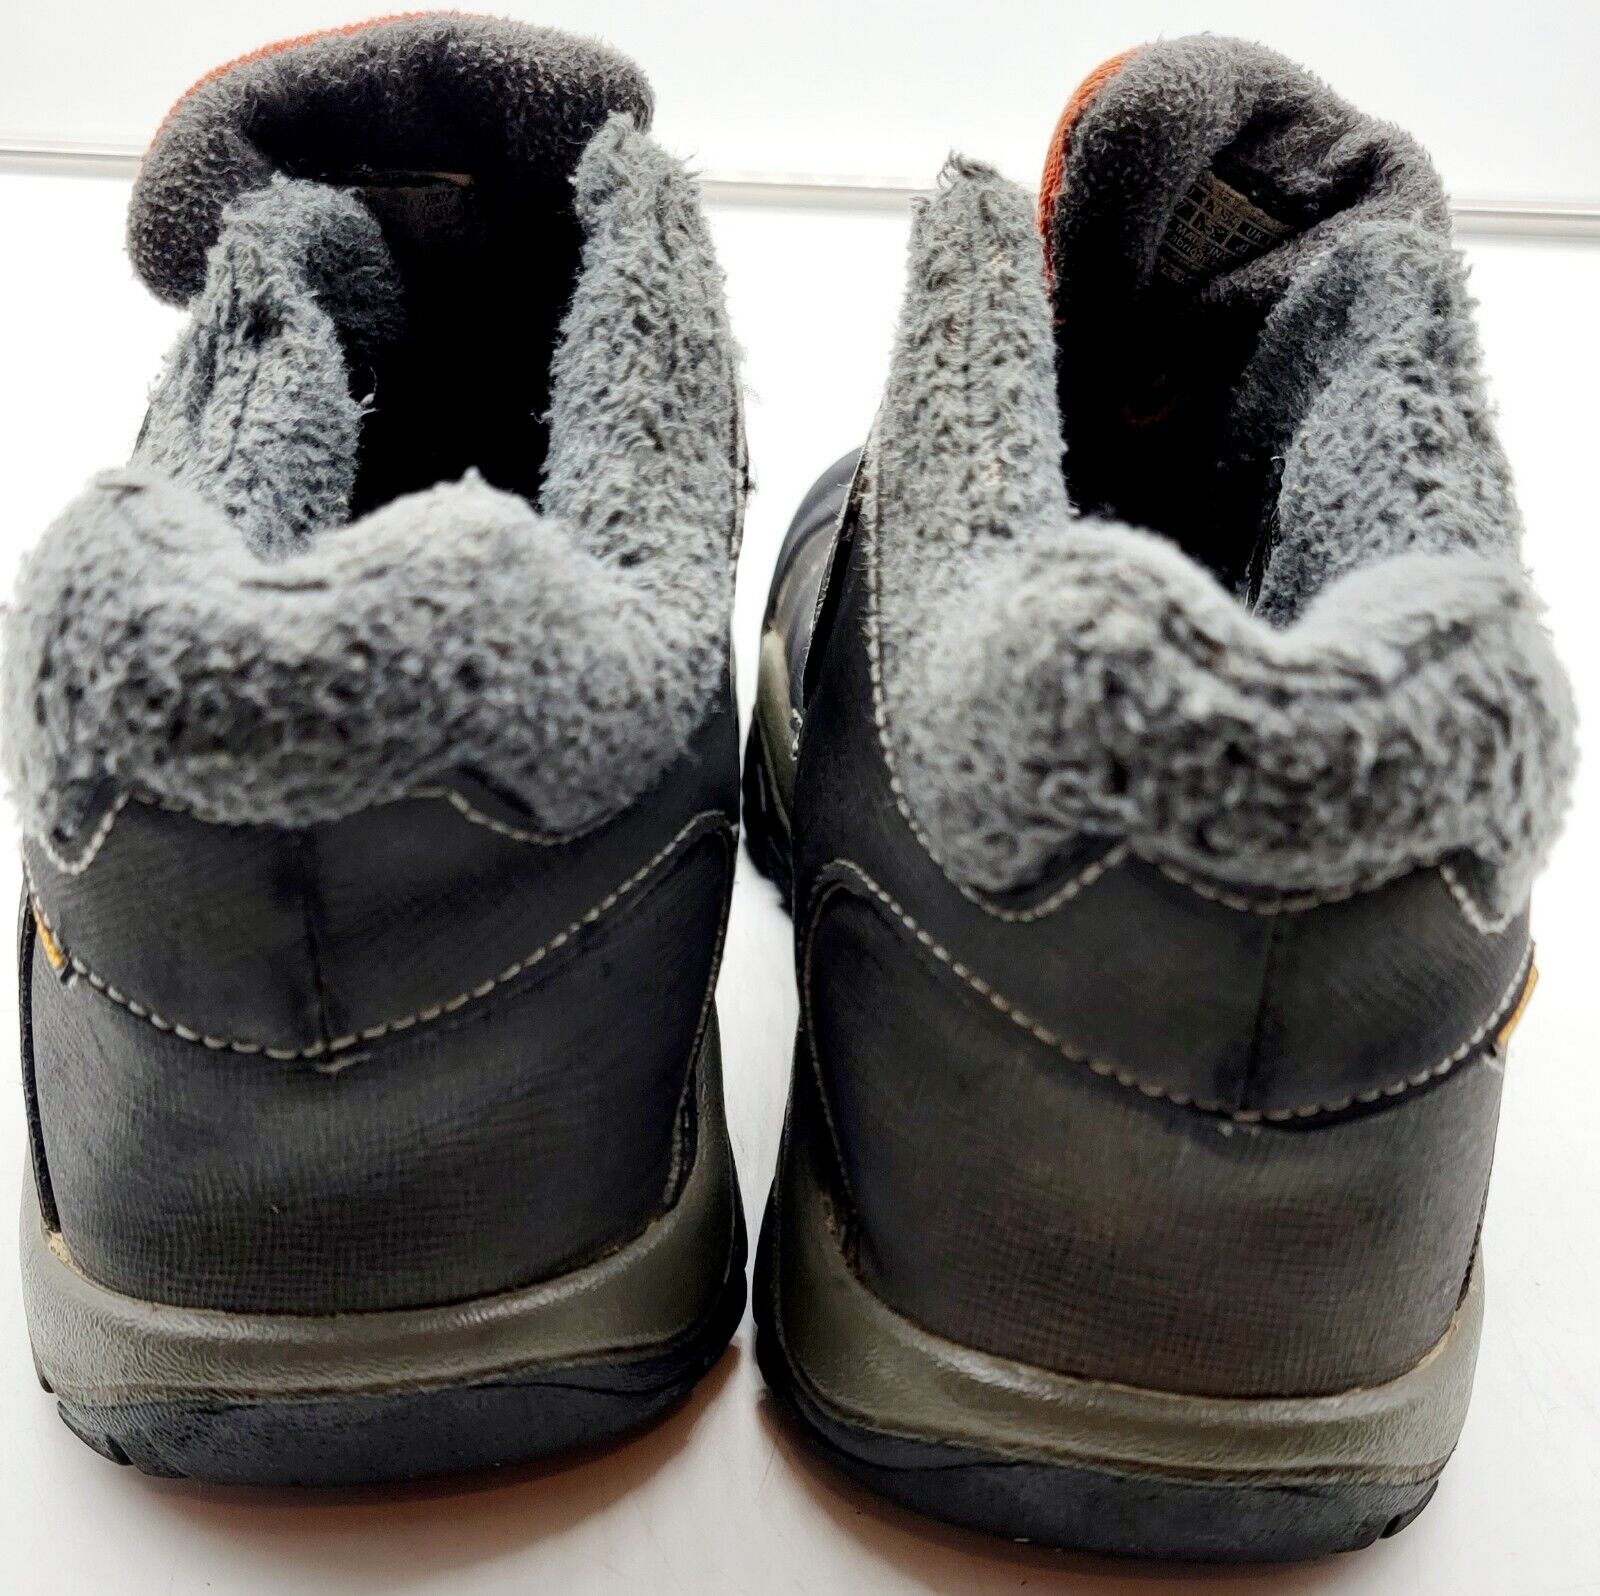 KEEN Kootenay II Waterproof 1019851 Youth Boot Size 5 US gray | eBay